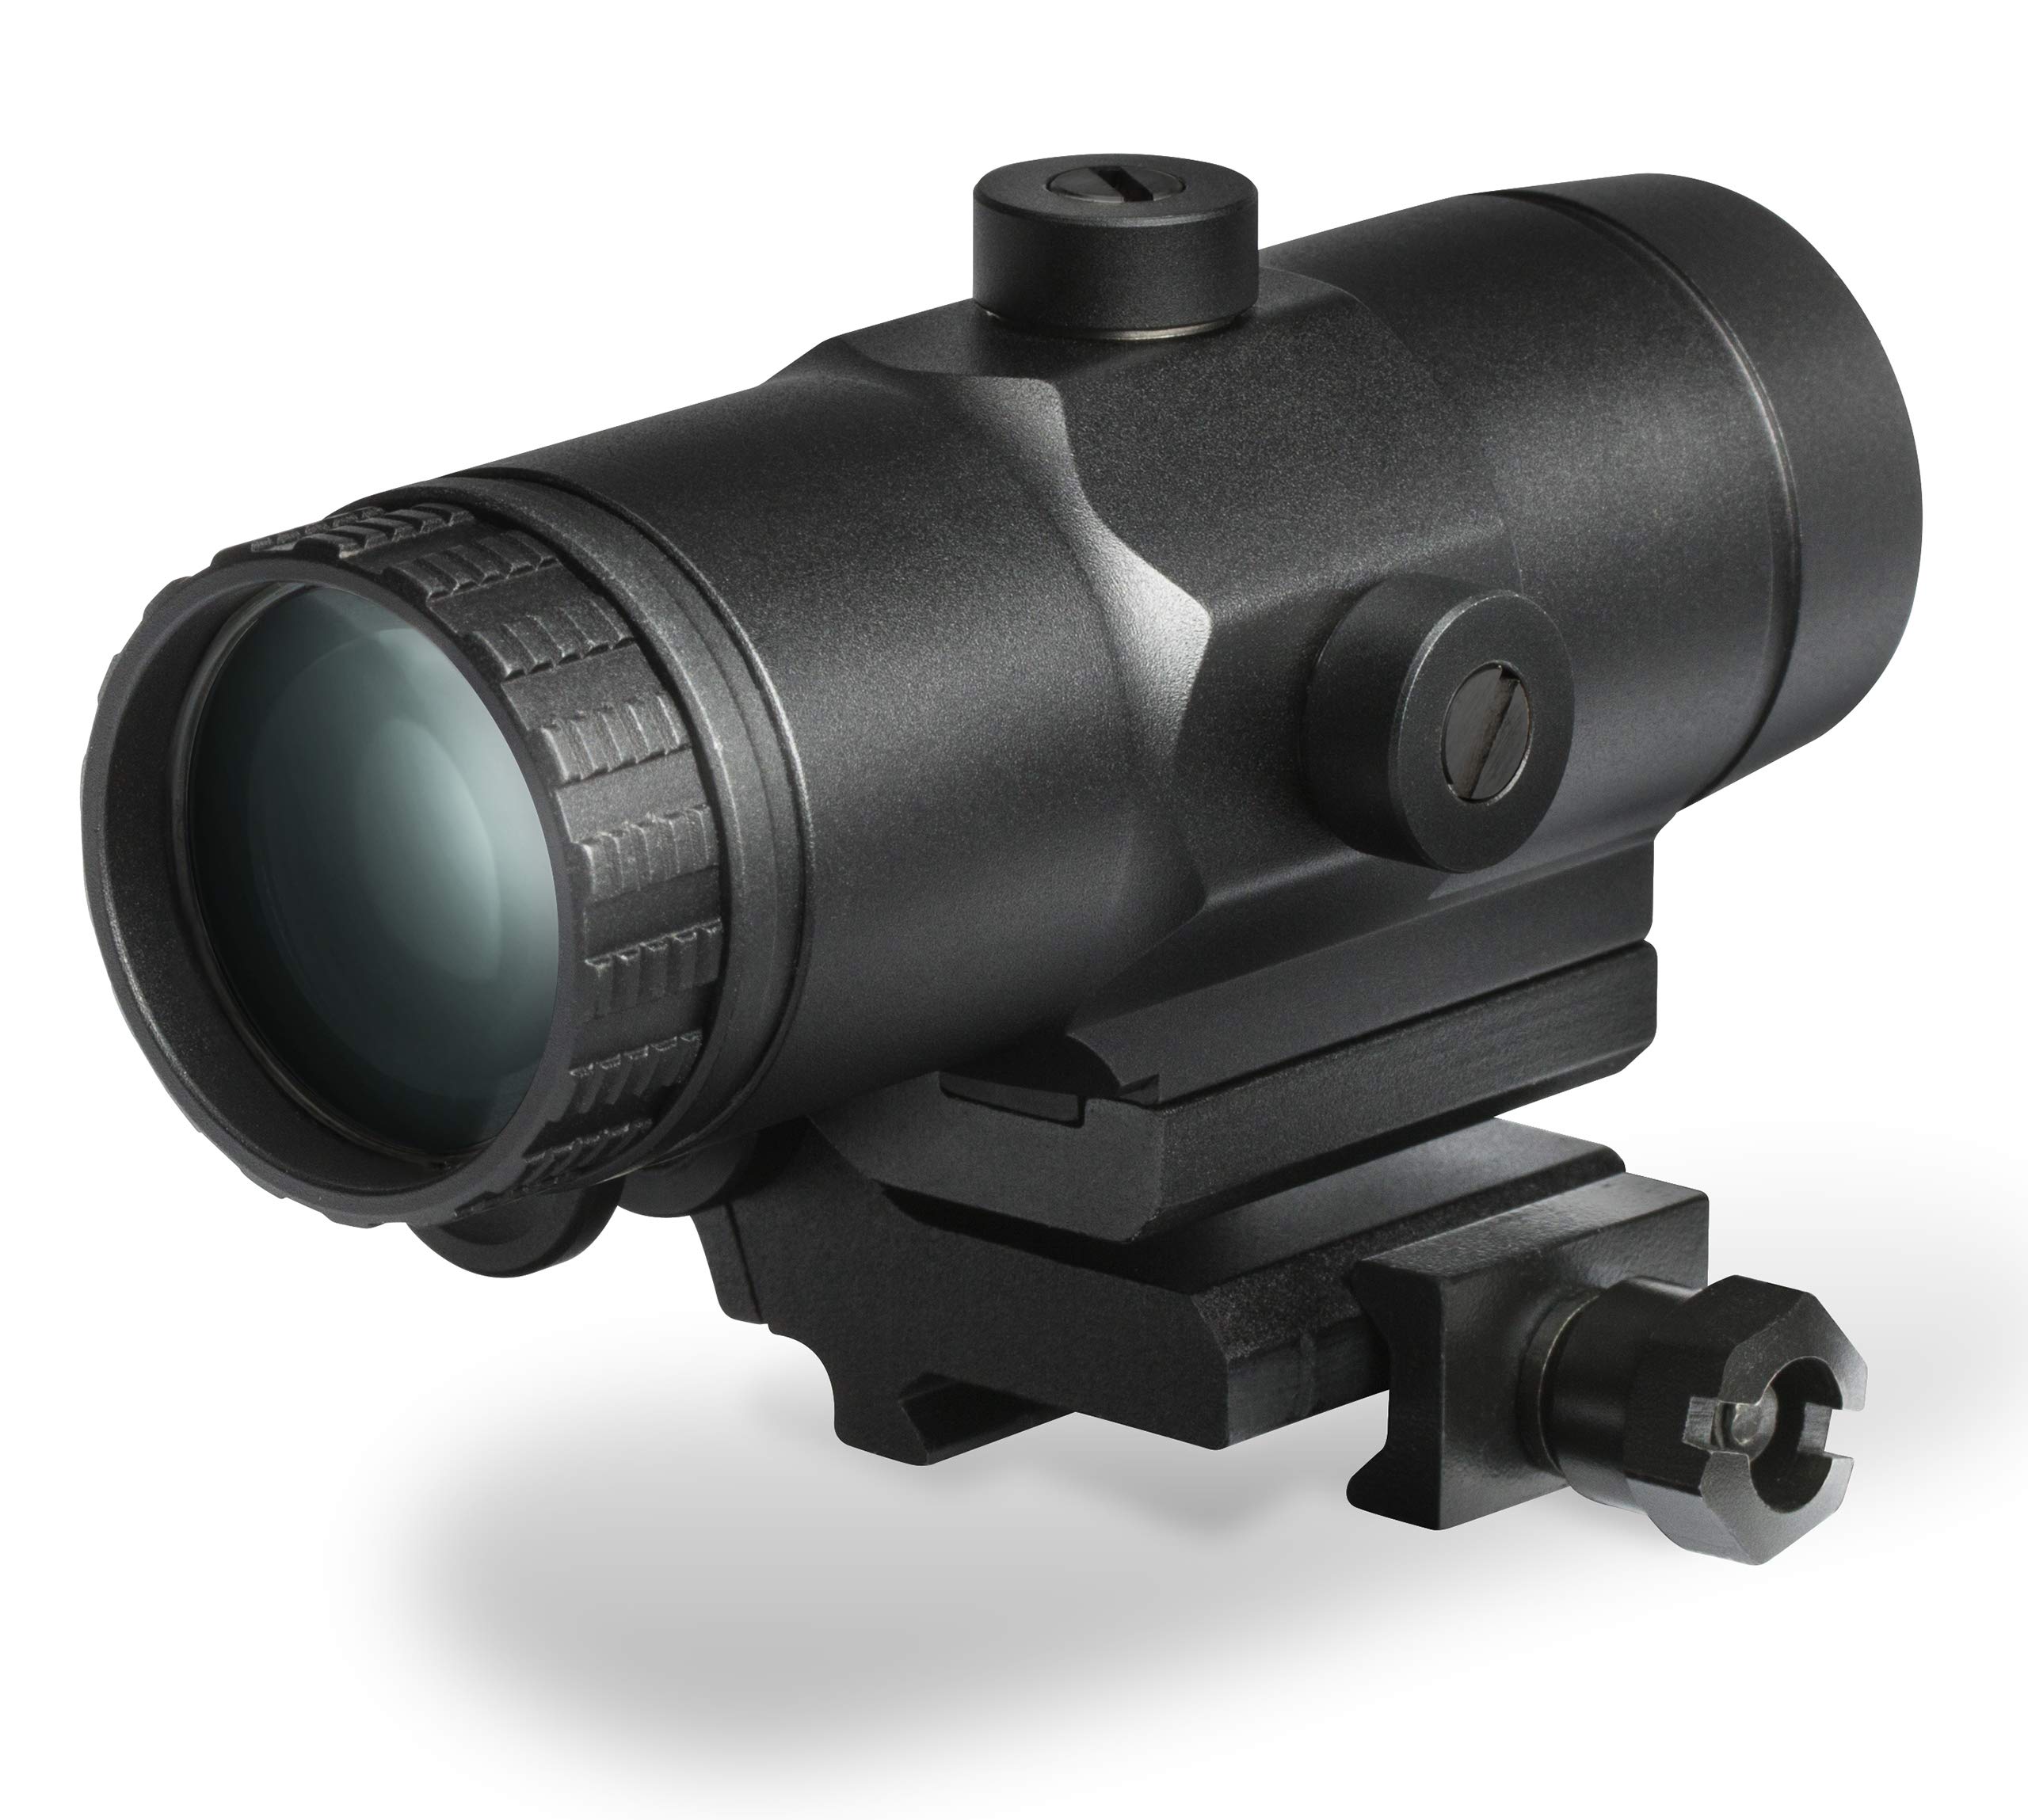 Vortex Optics VMX-3T 3X Red Dot Sight Magnifier with Built-in Flip Mount